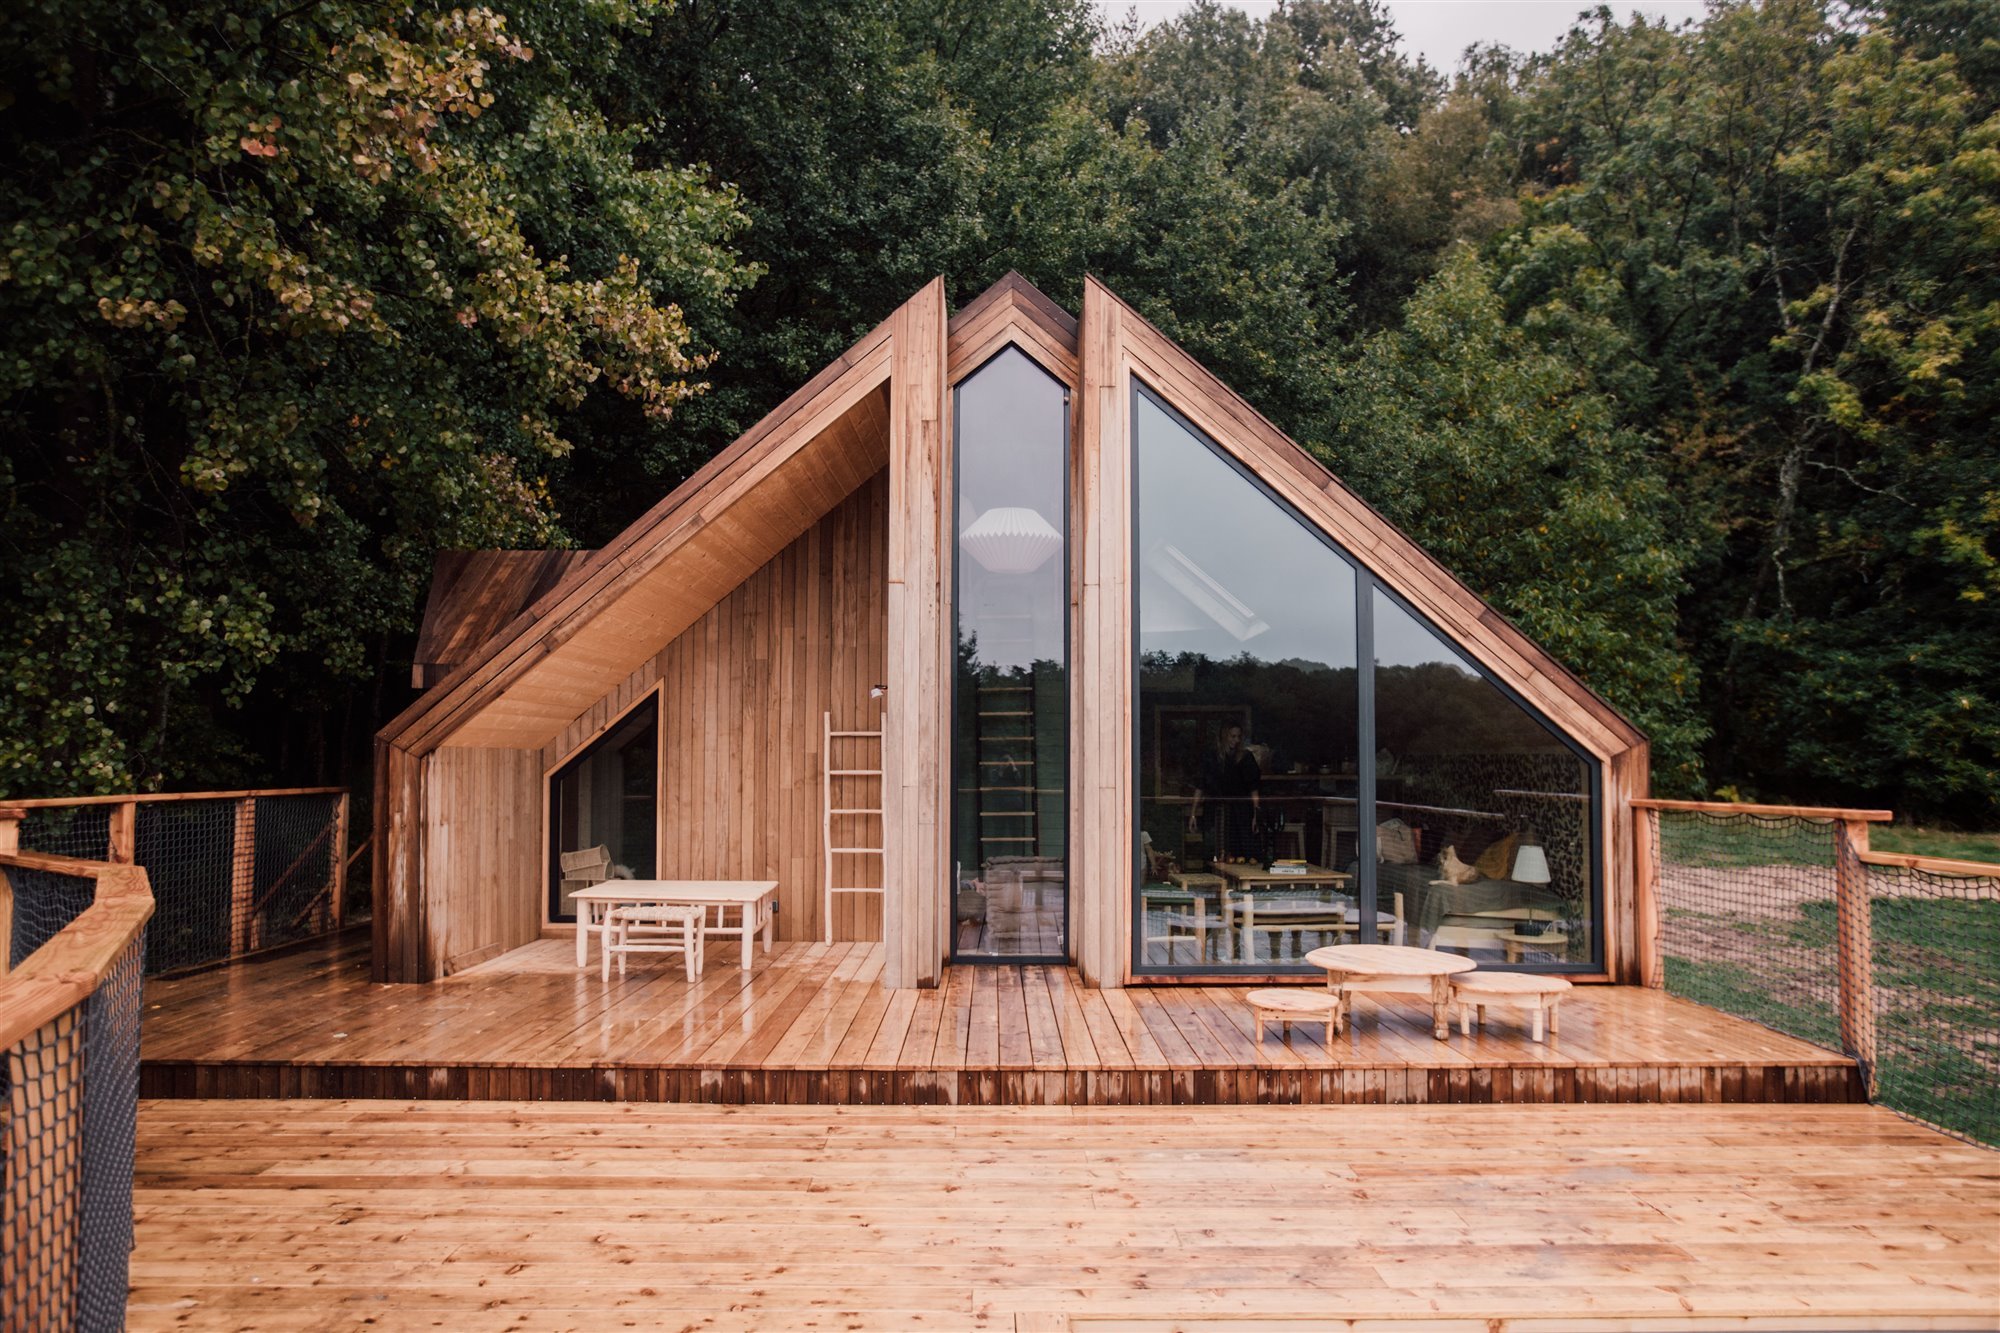 Cabaña de madera de forma triangular con grandes ventanas.